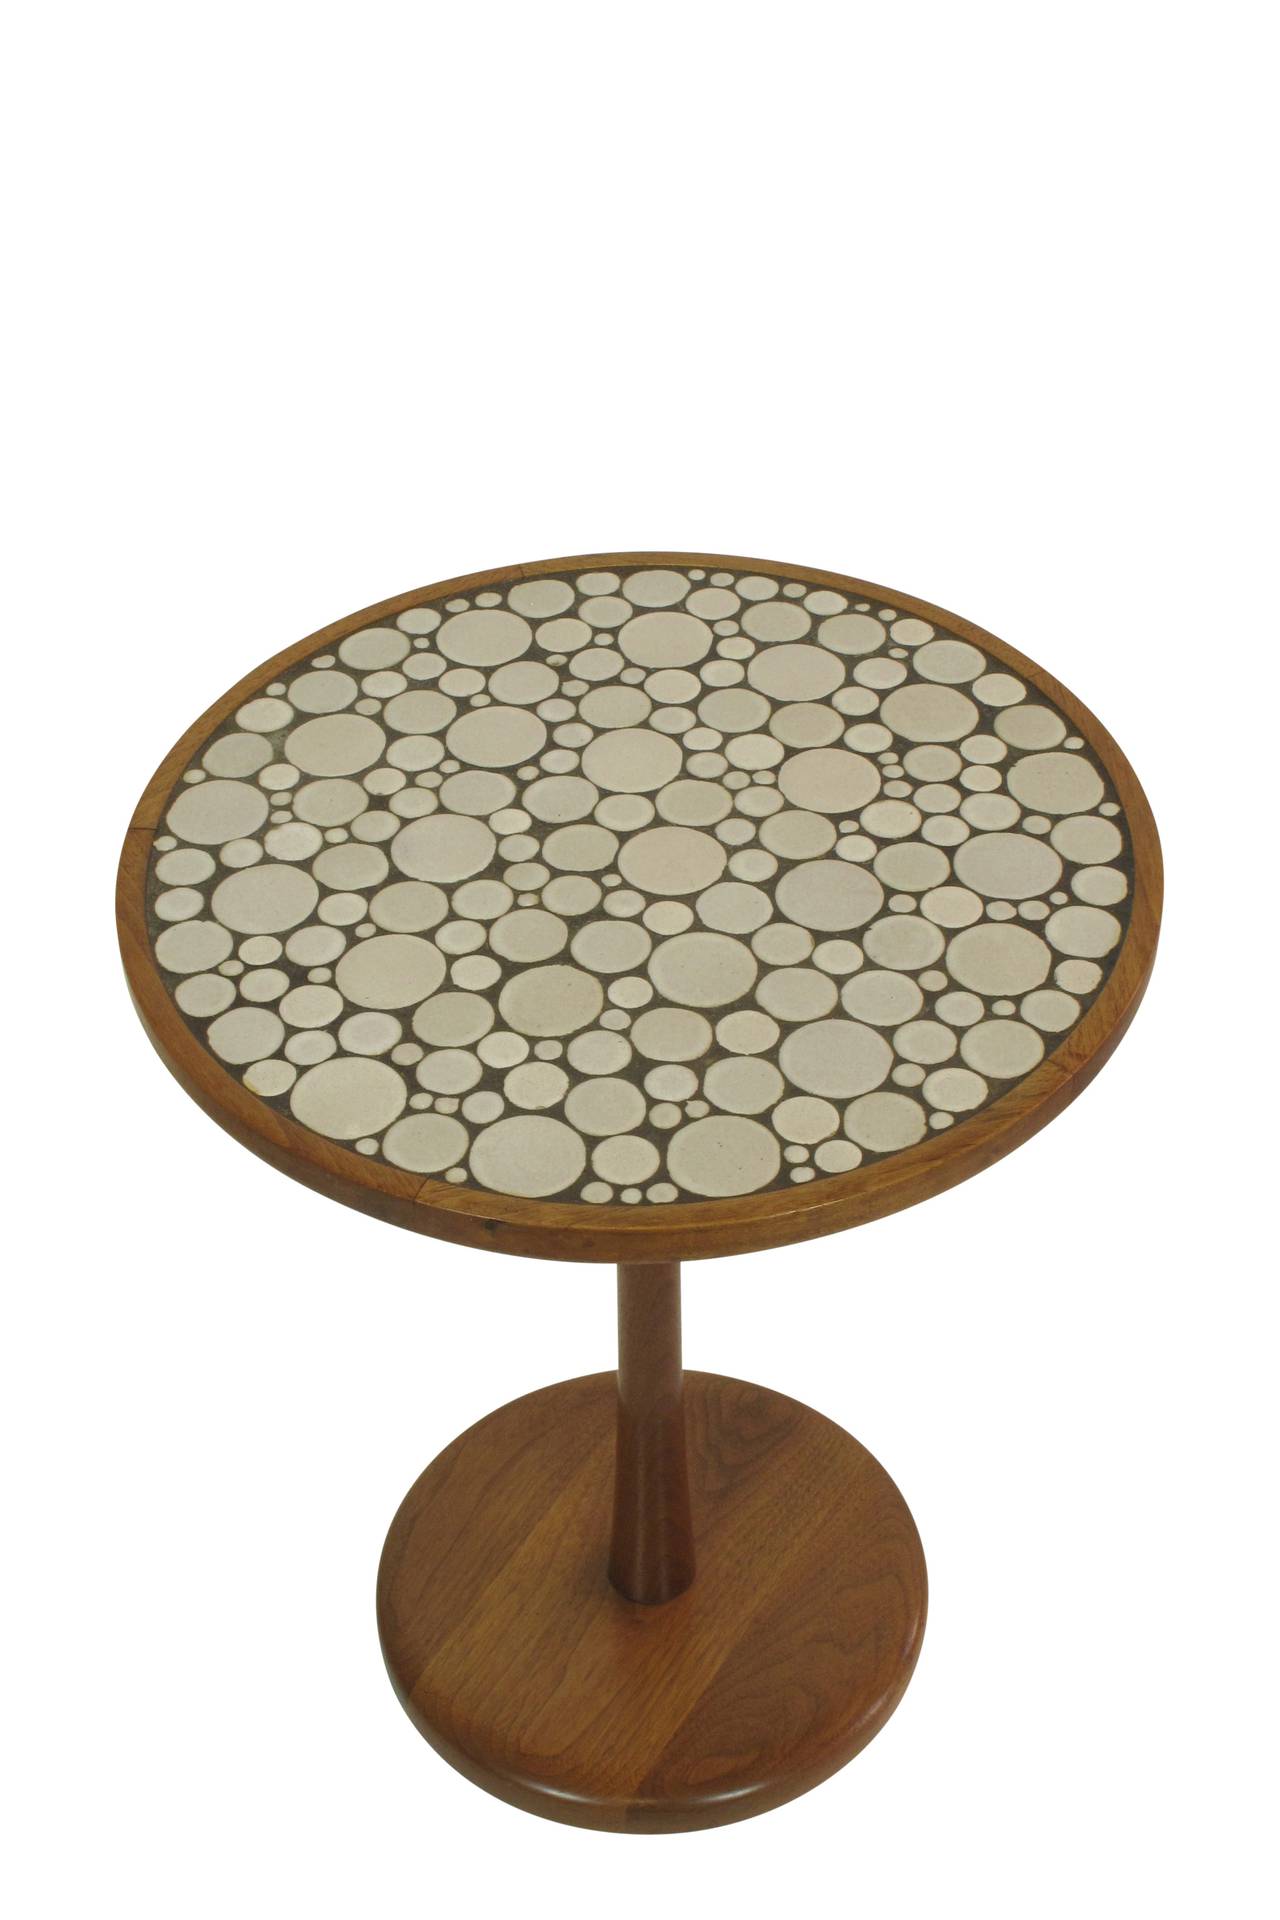 American Ceramic Top Occasional Table by Gordon Martz